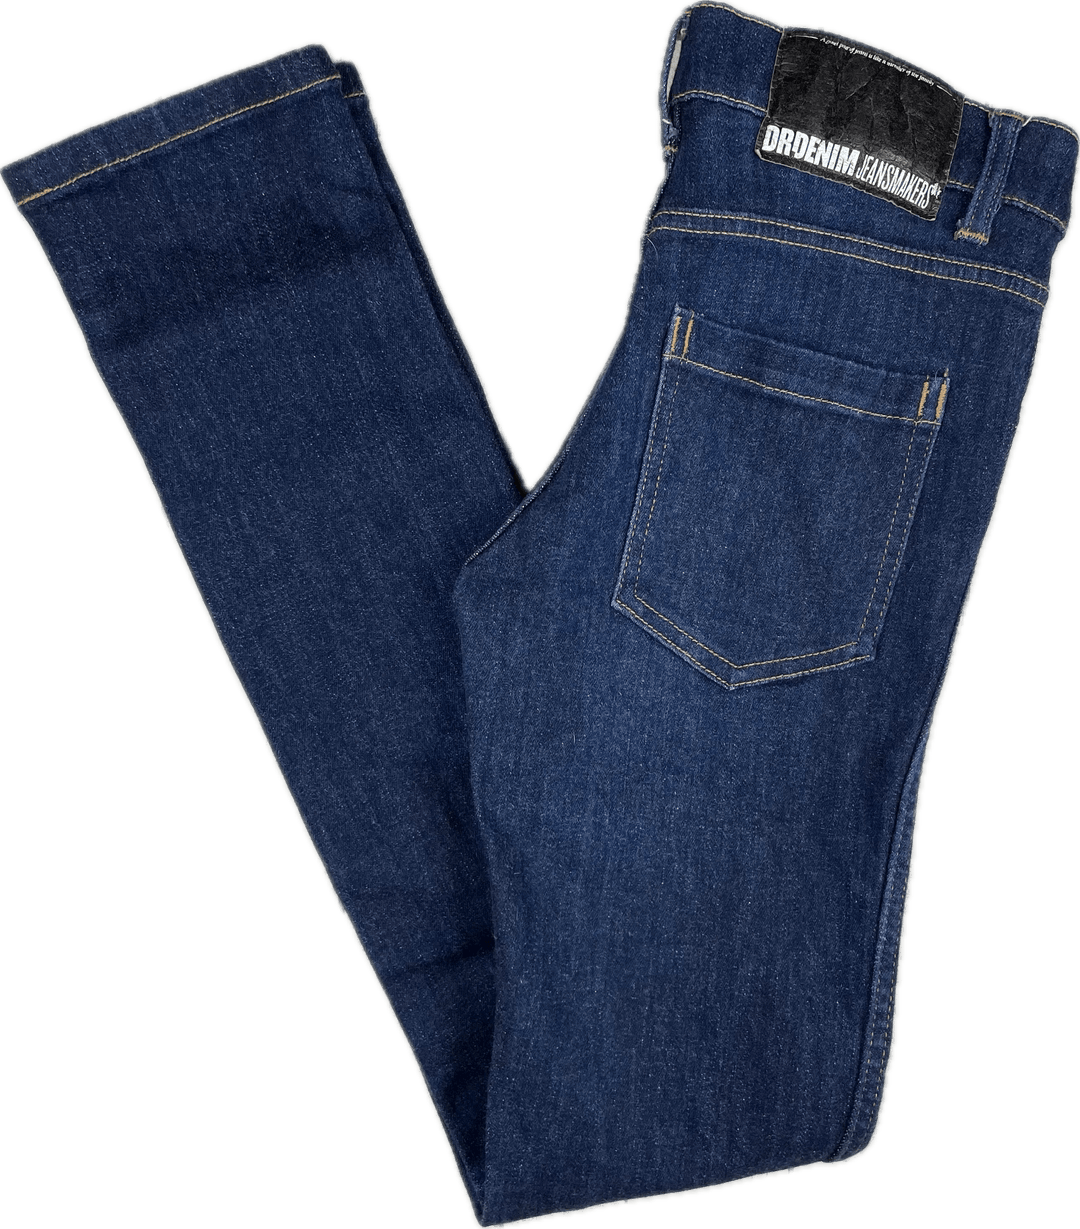 Dr Denim 'Snap' Stretch Super Skinny Jeans - Size 28/32 - Jean Pool